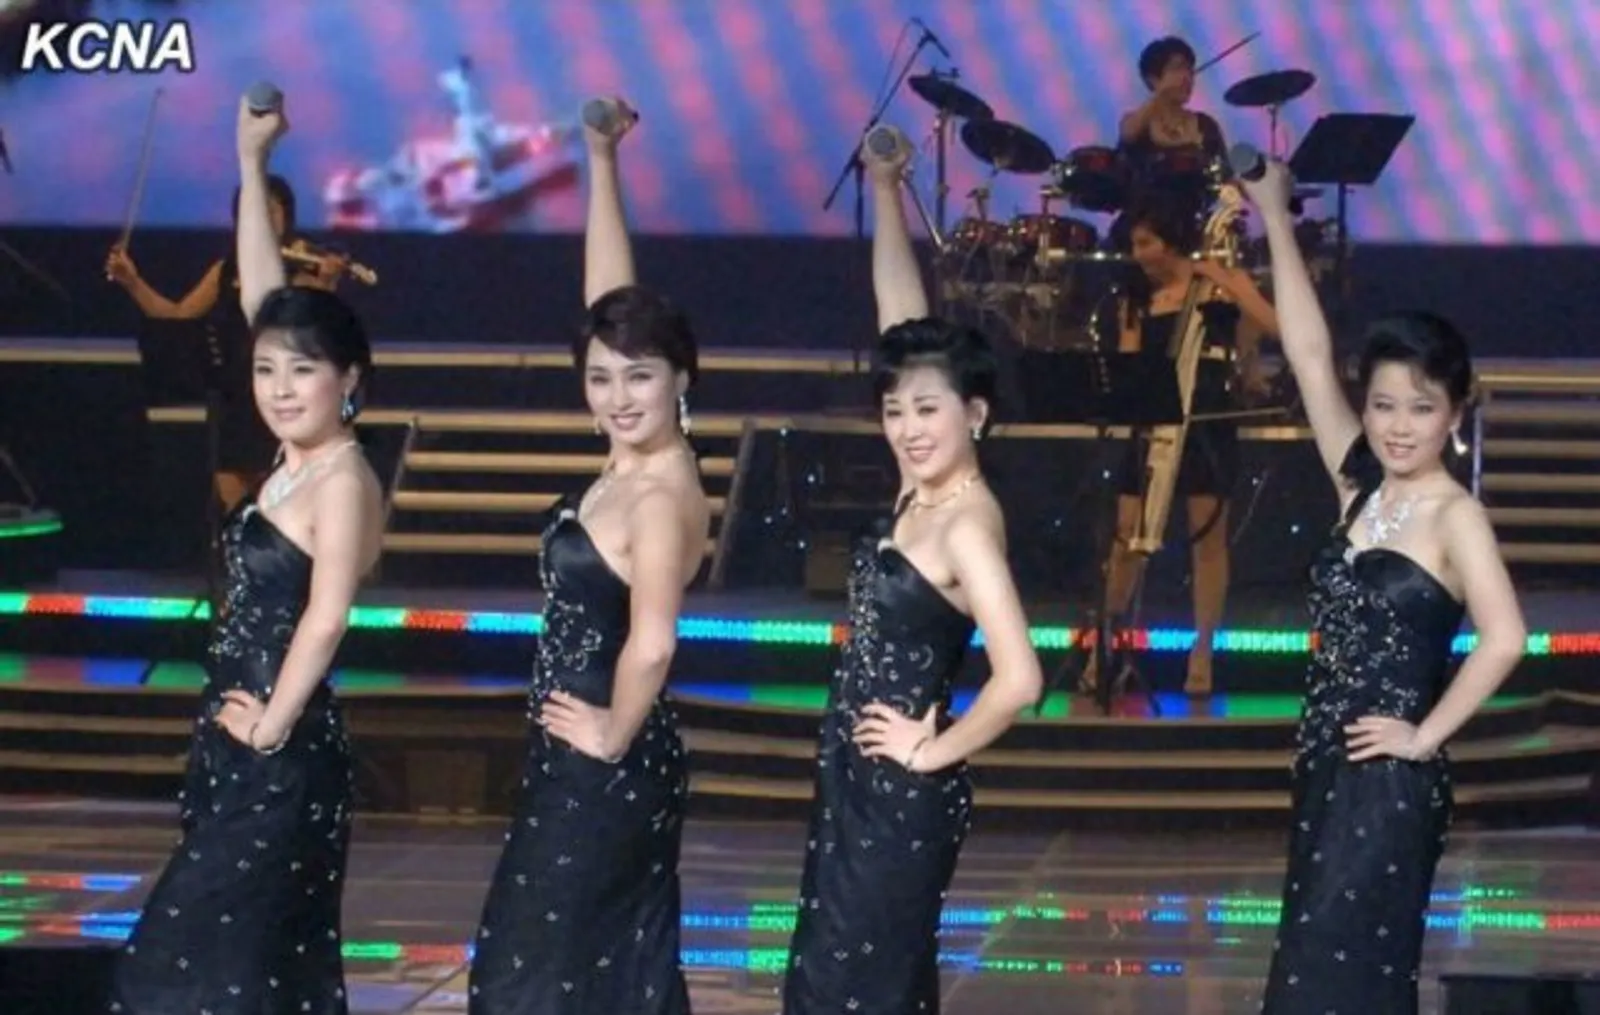 Nggak Banyak yang Tahu, Begini Gaya Girlband di Korea Utara